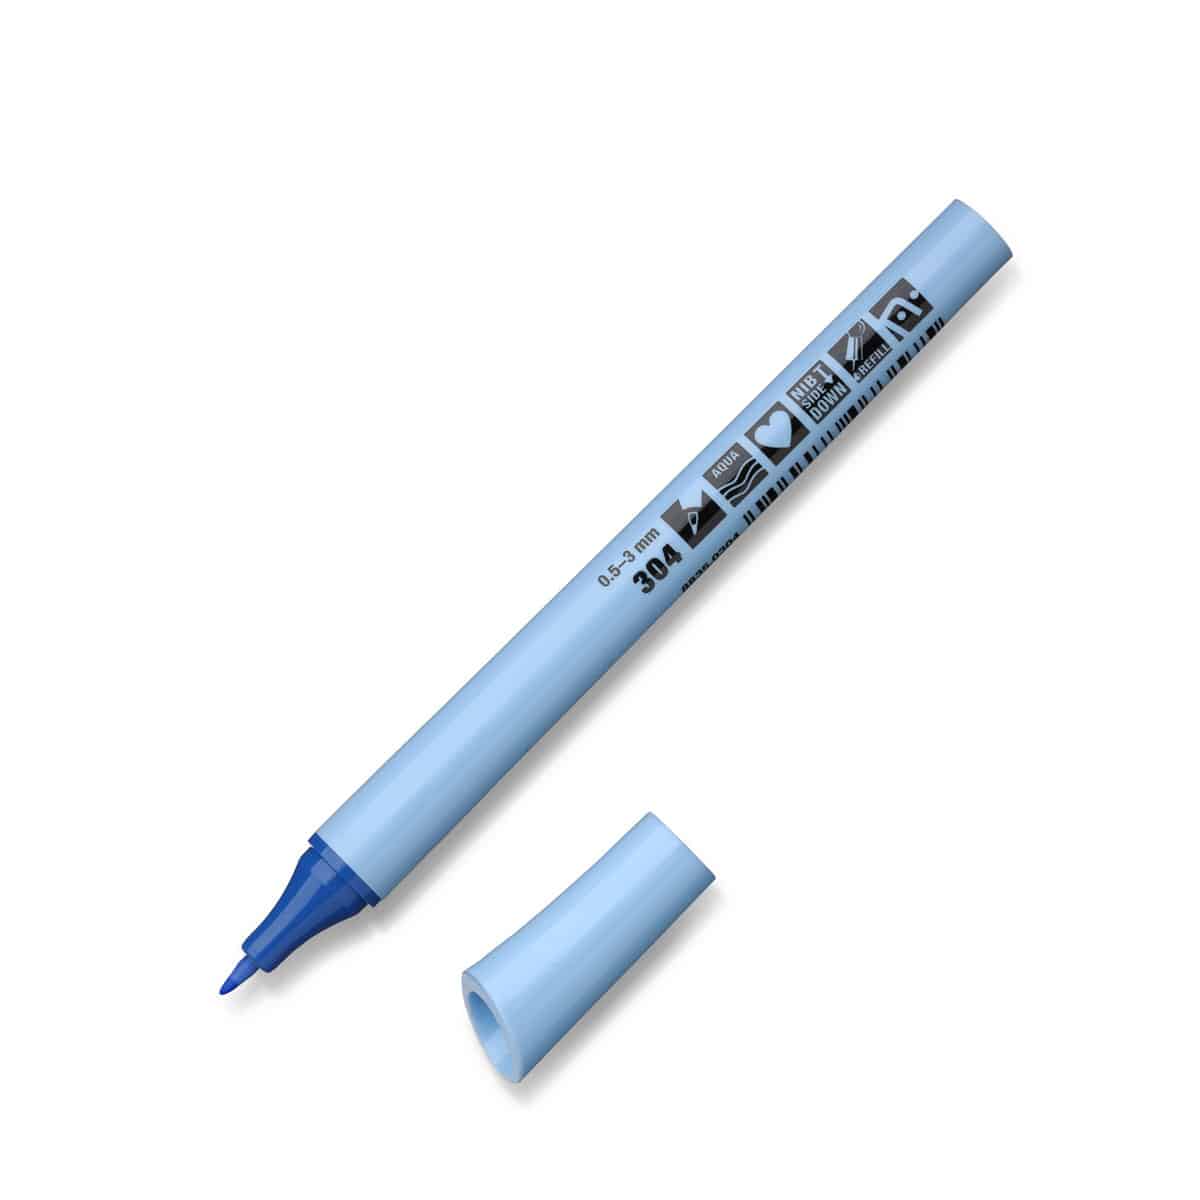 Neuland FineOne® Flex, flexible fiber nib 0.5-3 mm, single colors- 304 jeansblau